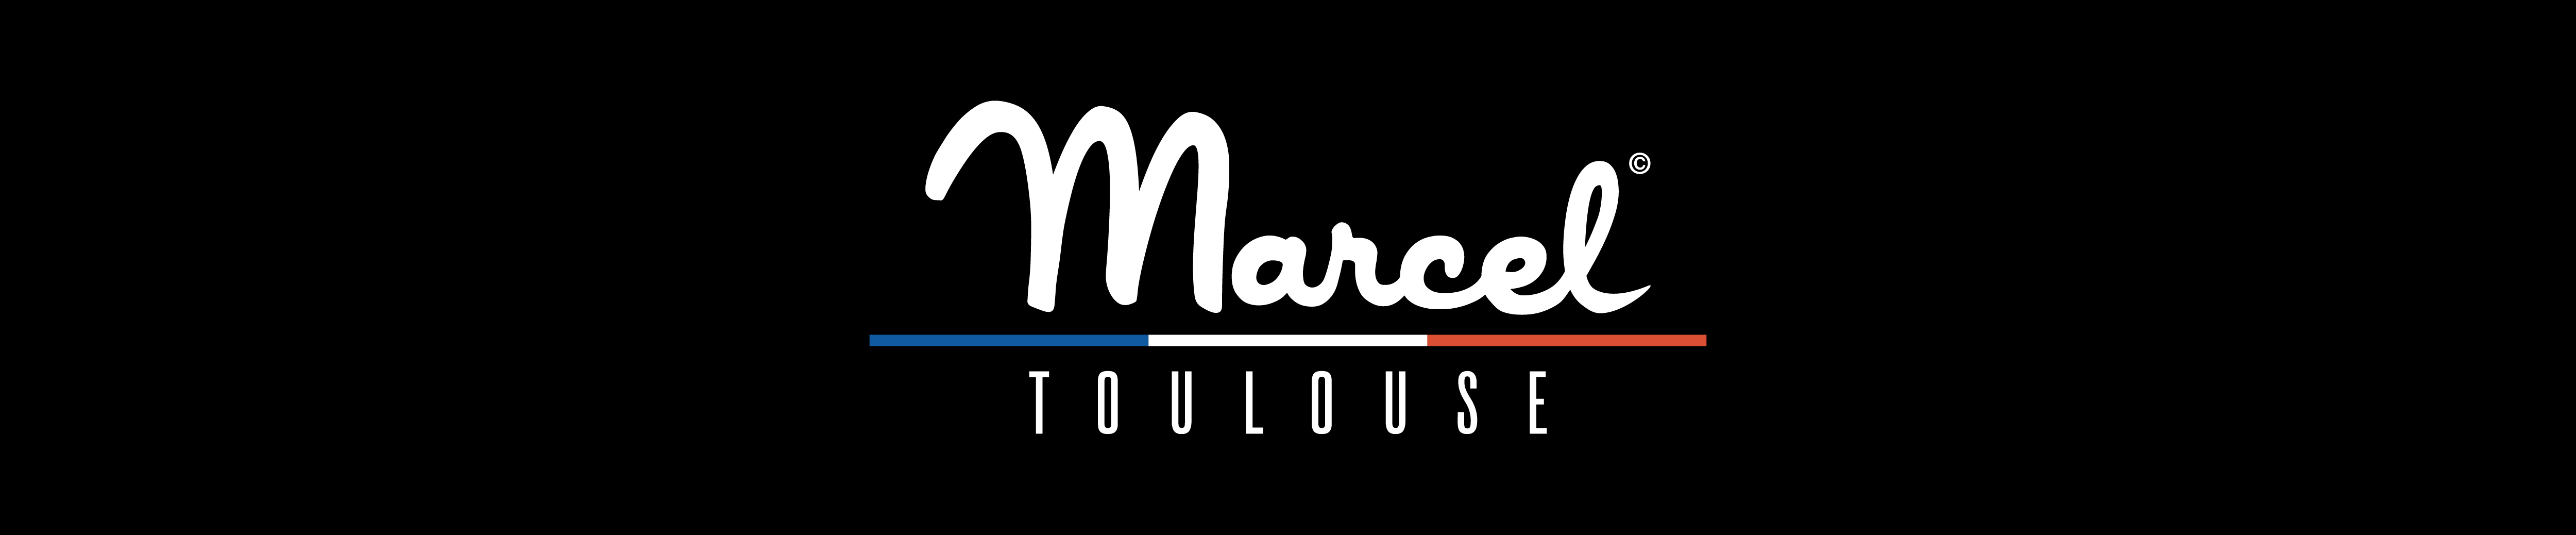 logo boutique marcel travel posters toulouse